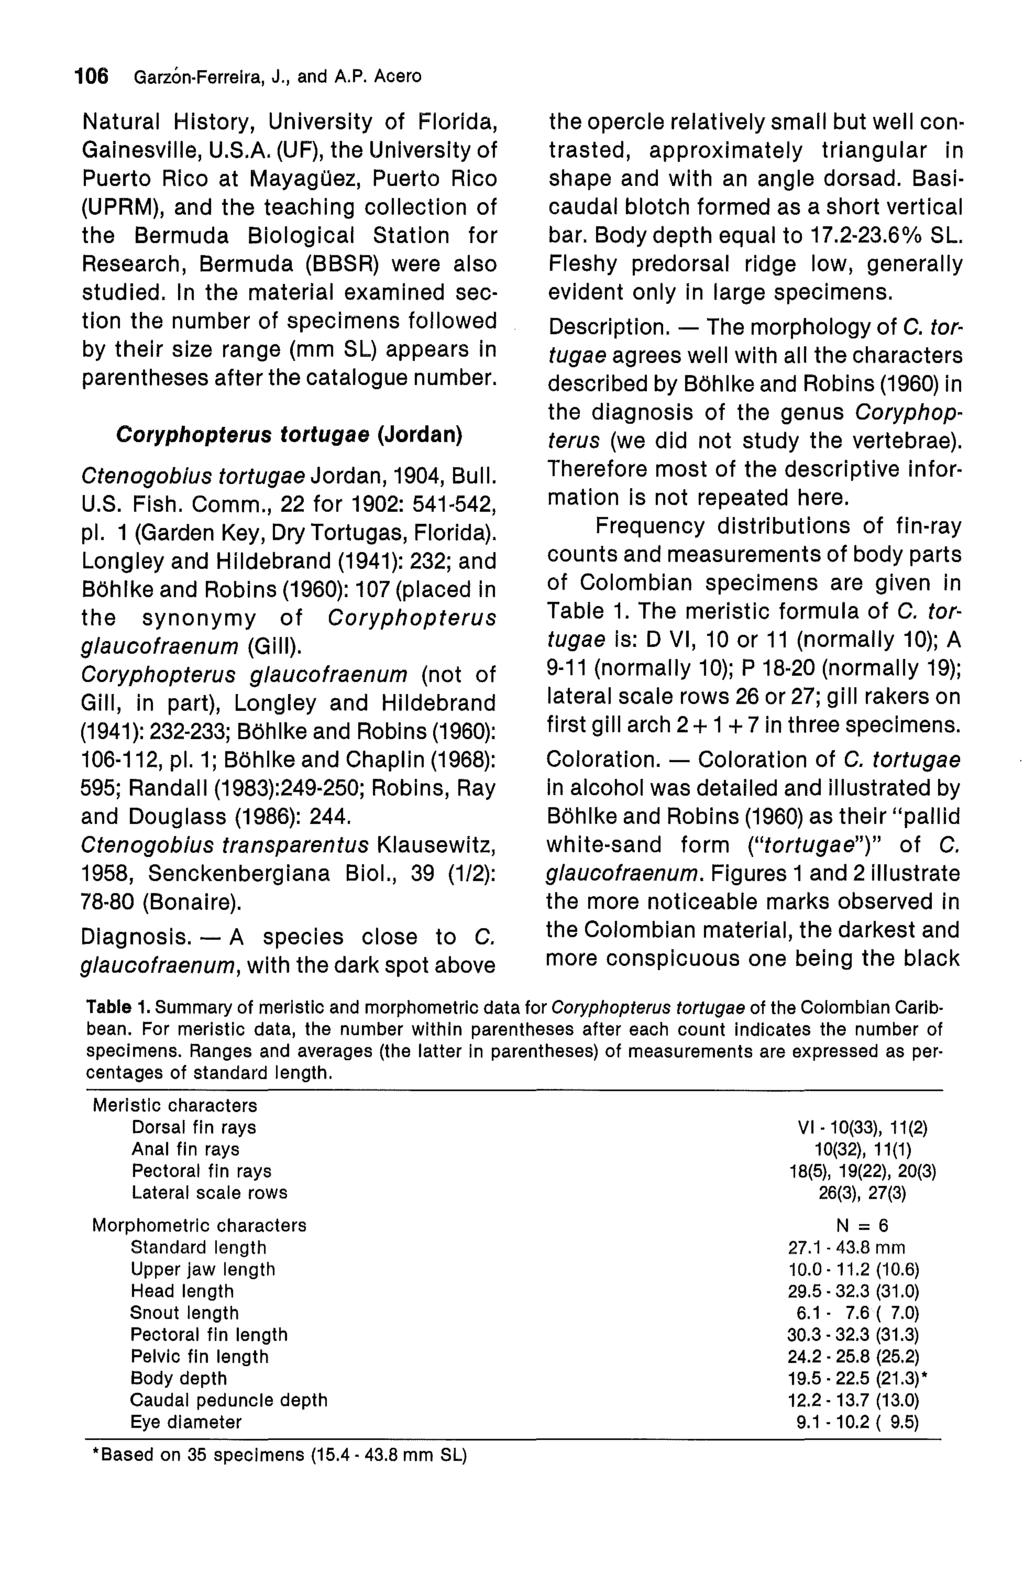 Gulf of Mexico Science, Vol. 11 [1990], No. 2, Ar